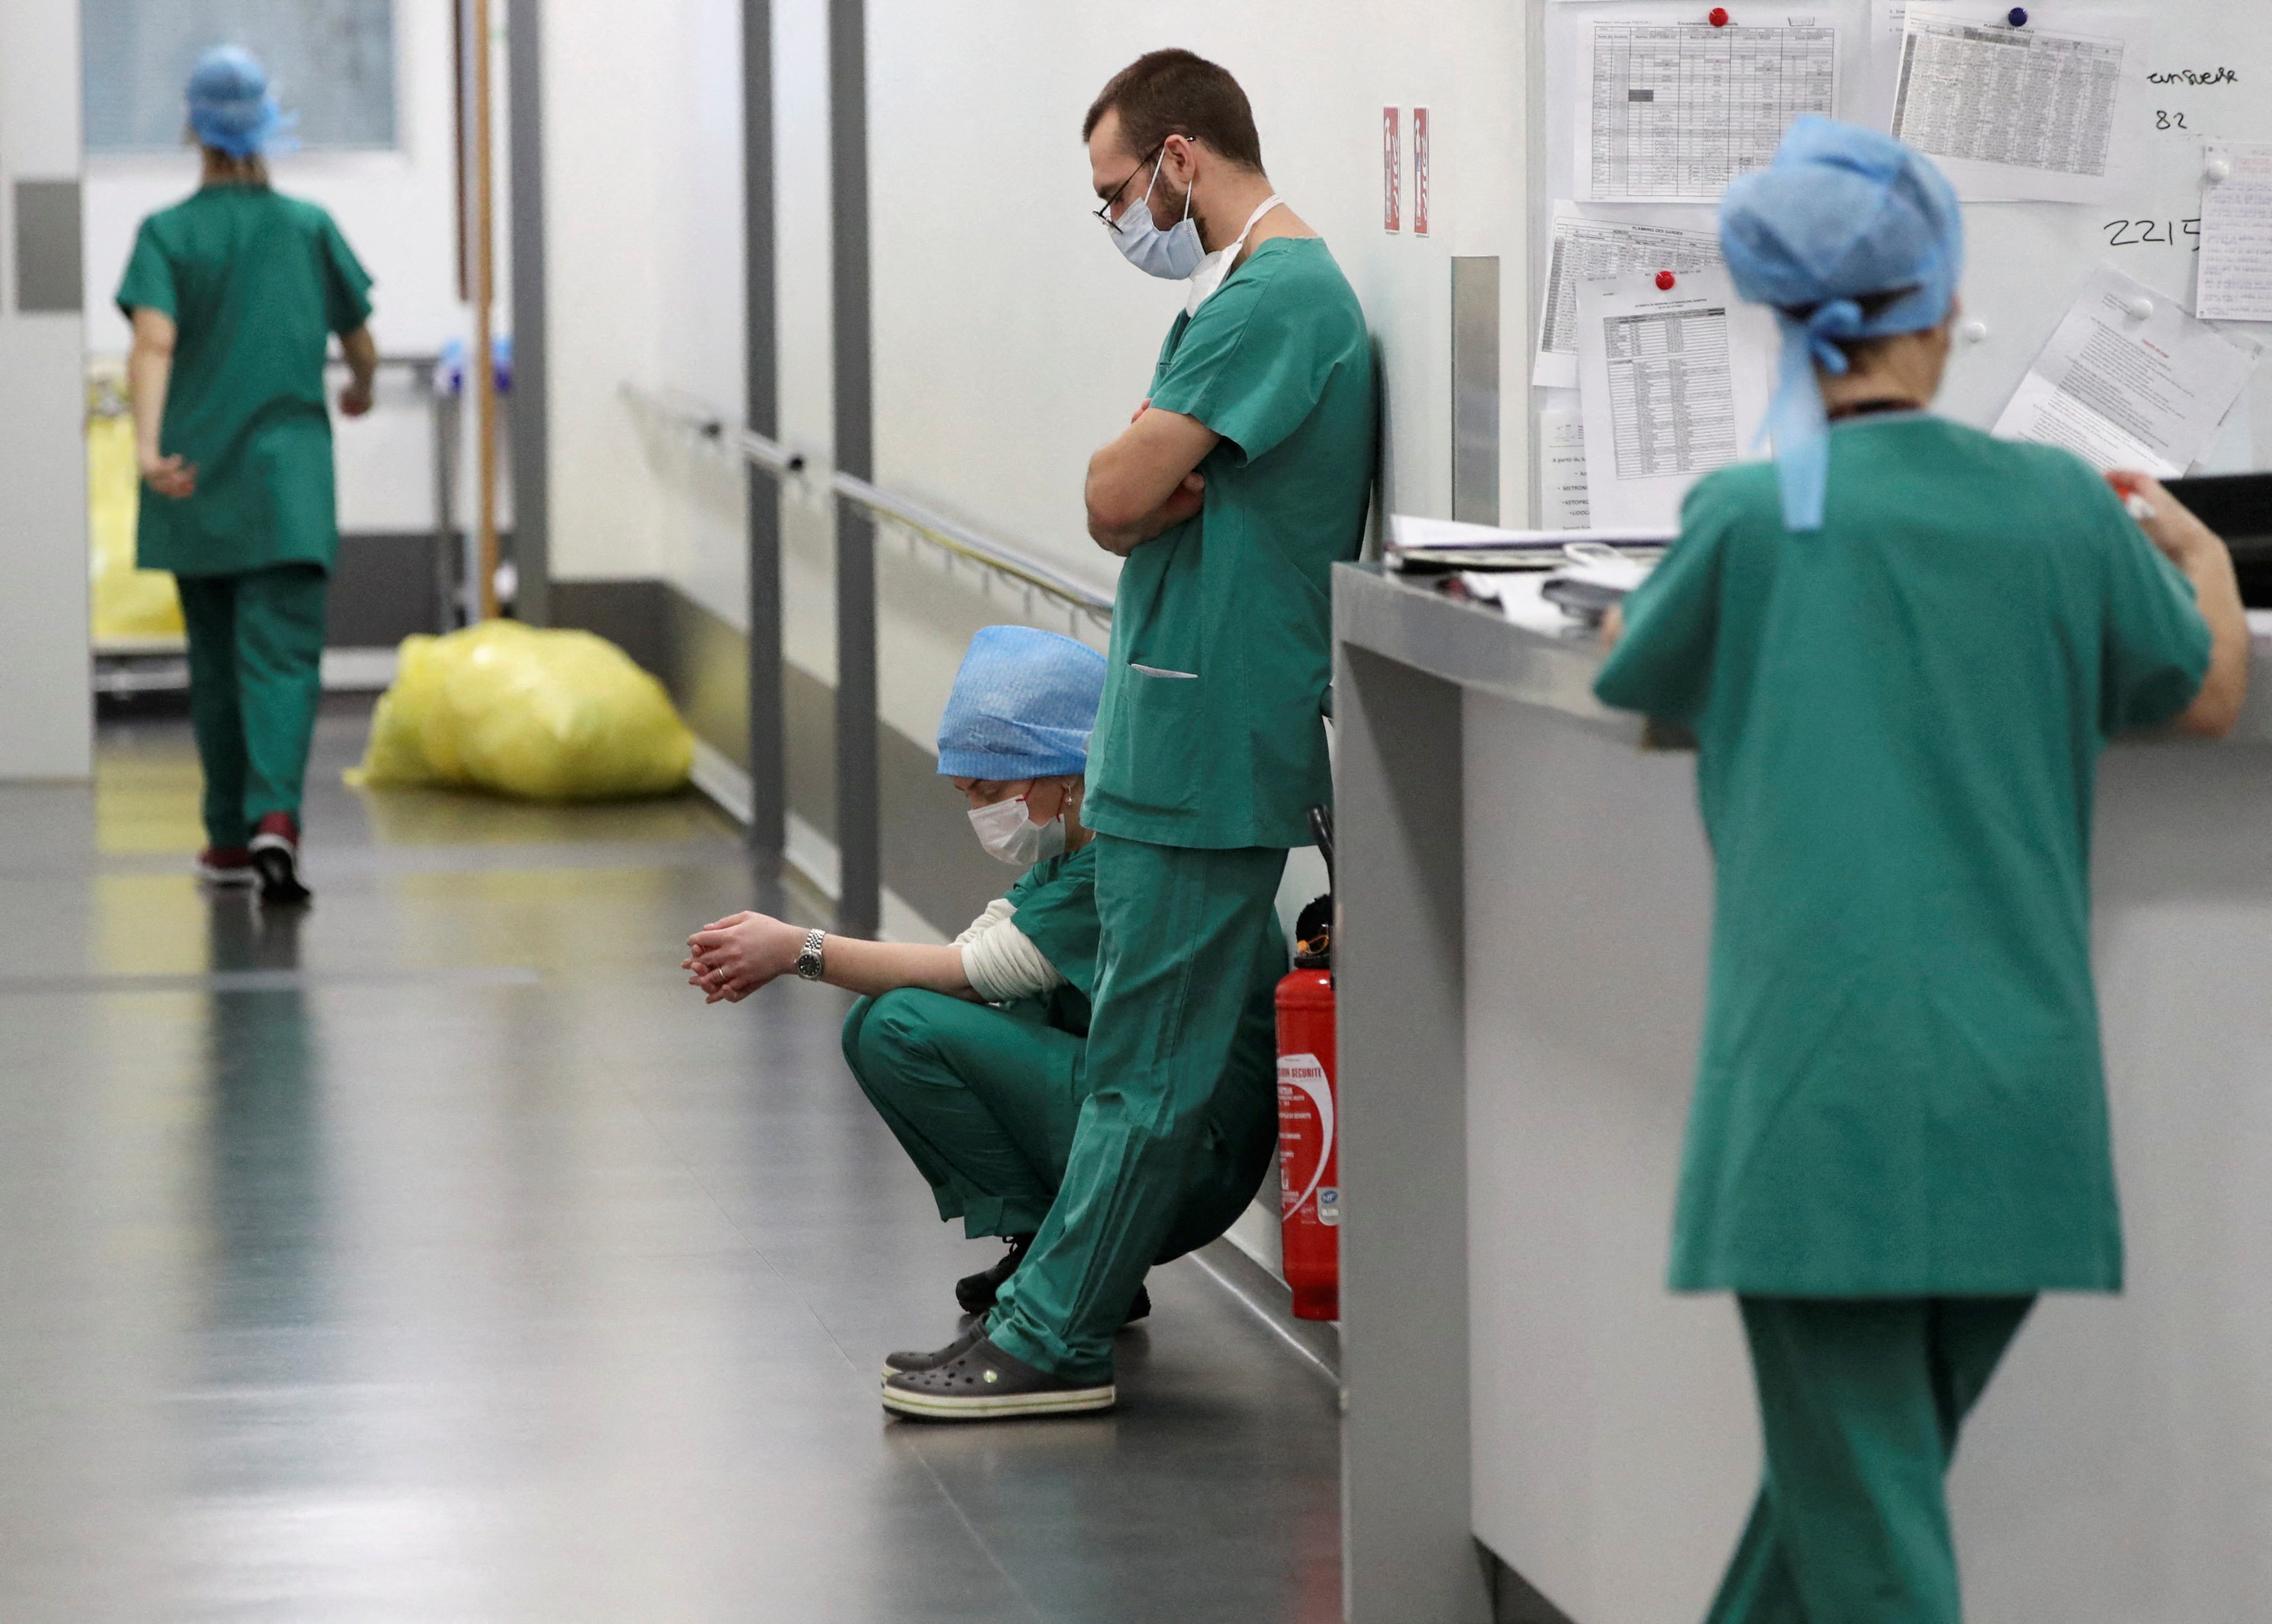 Intensive Care Unit (ICU) for COVID-19 patients at the Hospital Center de Colmar